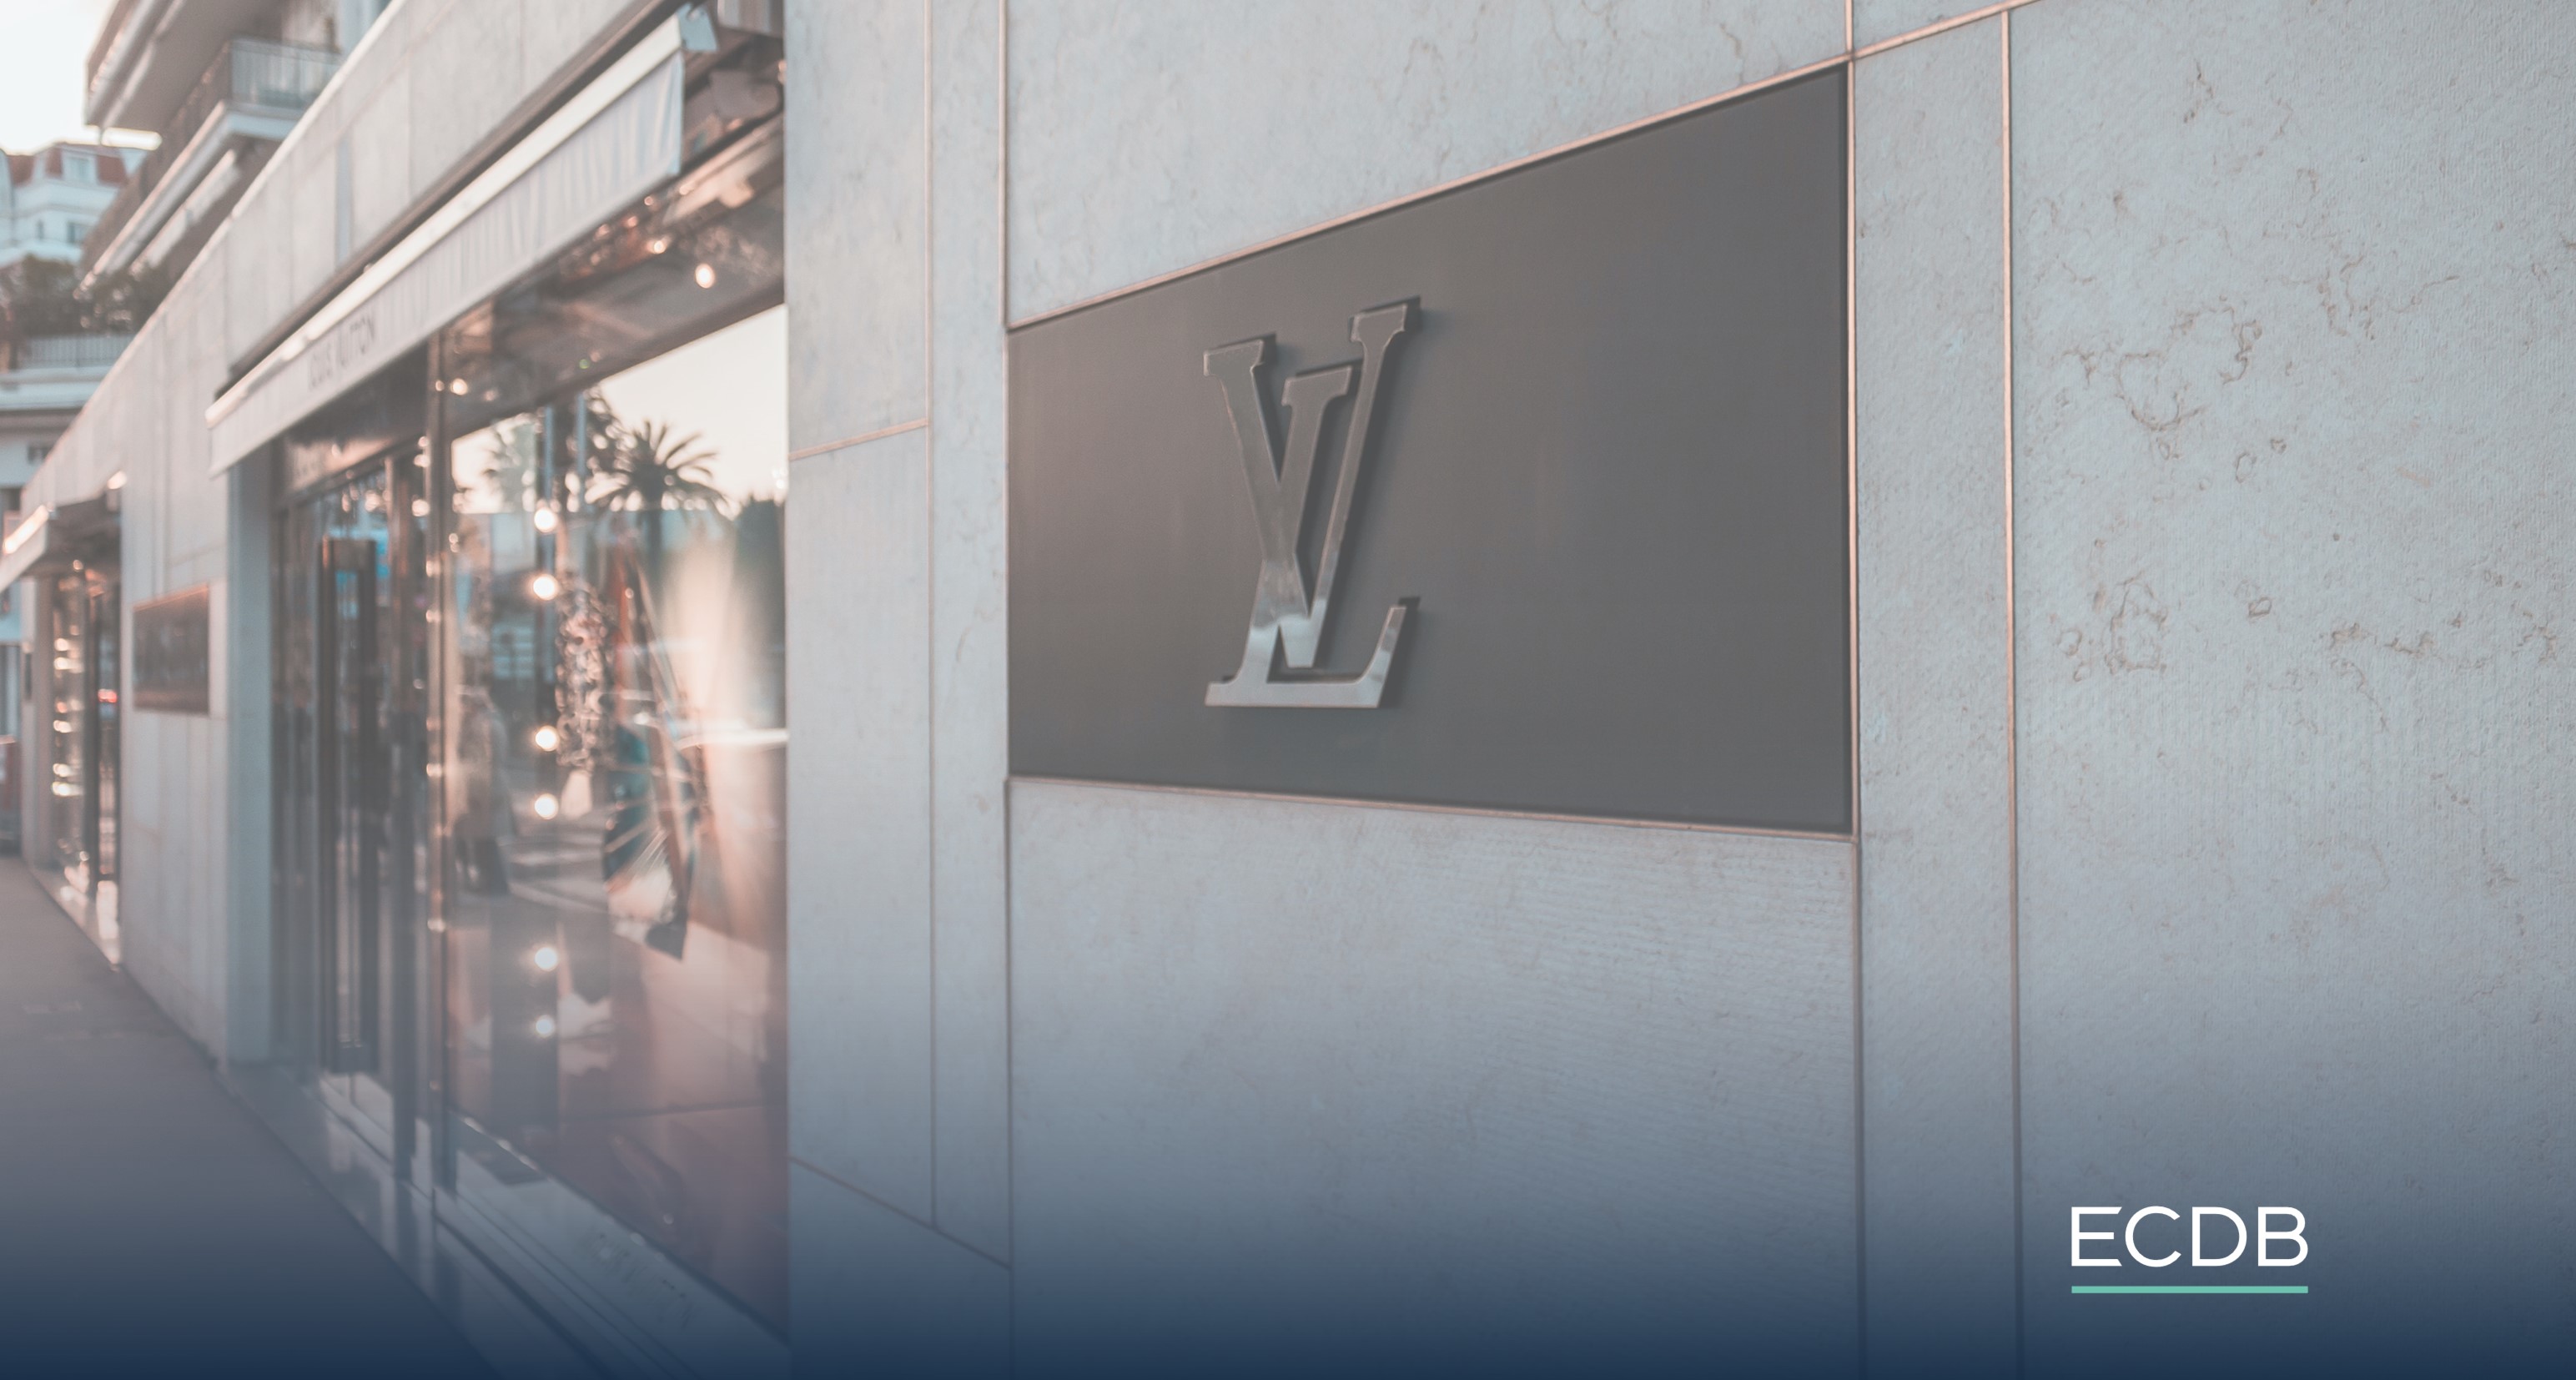 Louis Vuitton Company Market Research